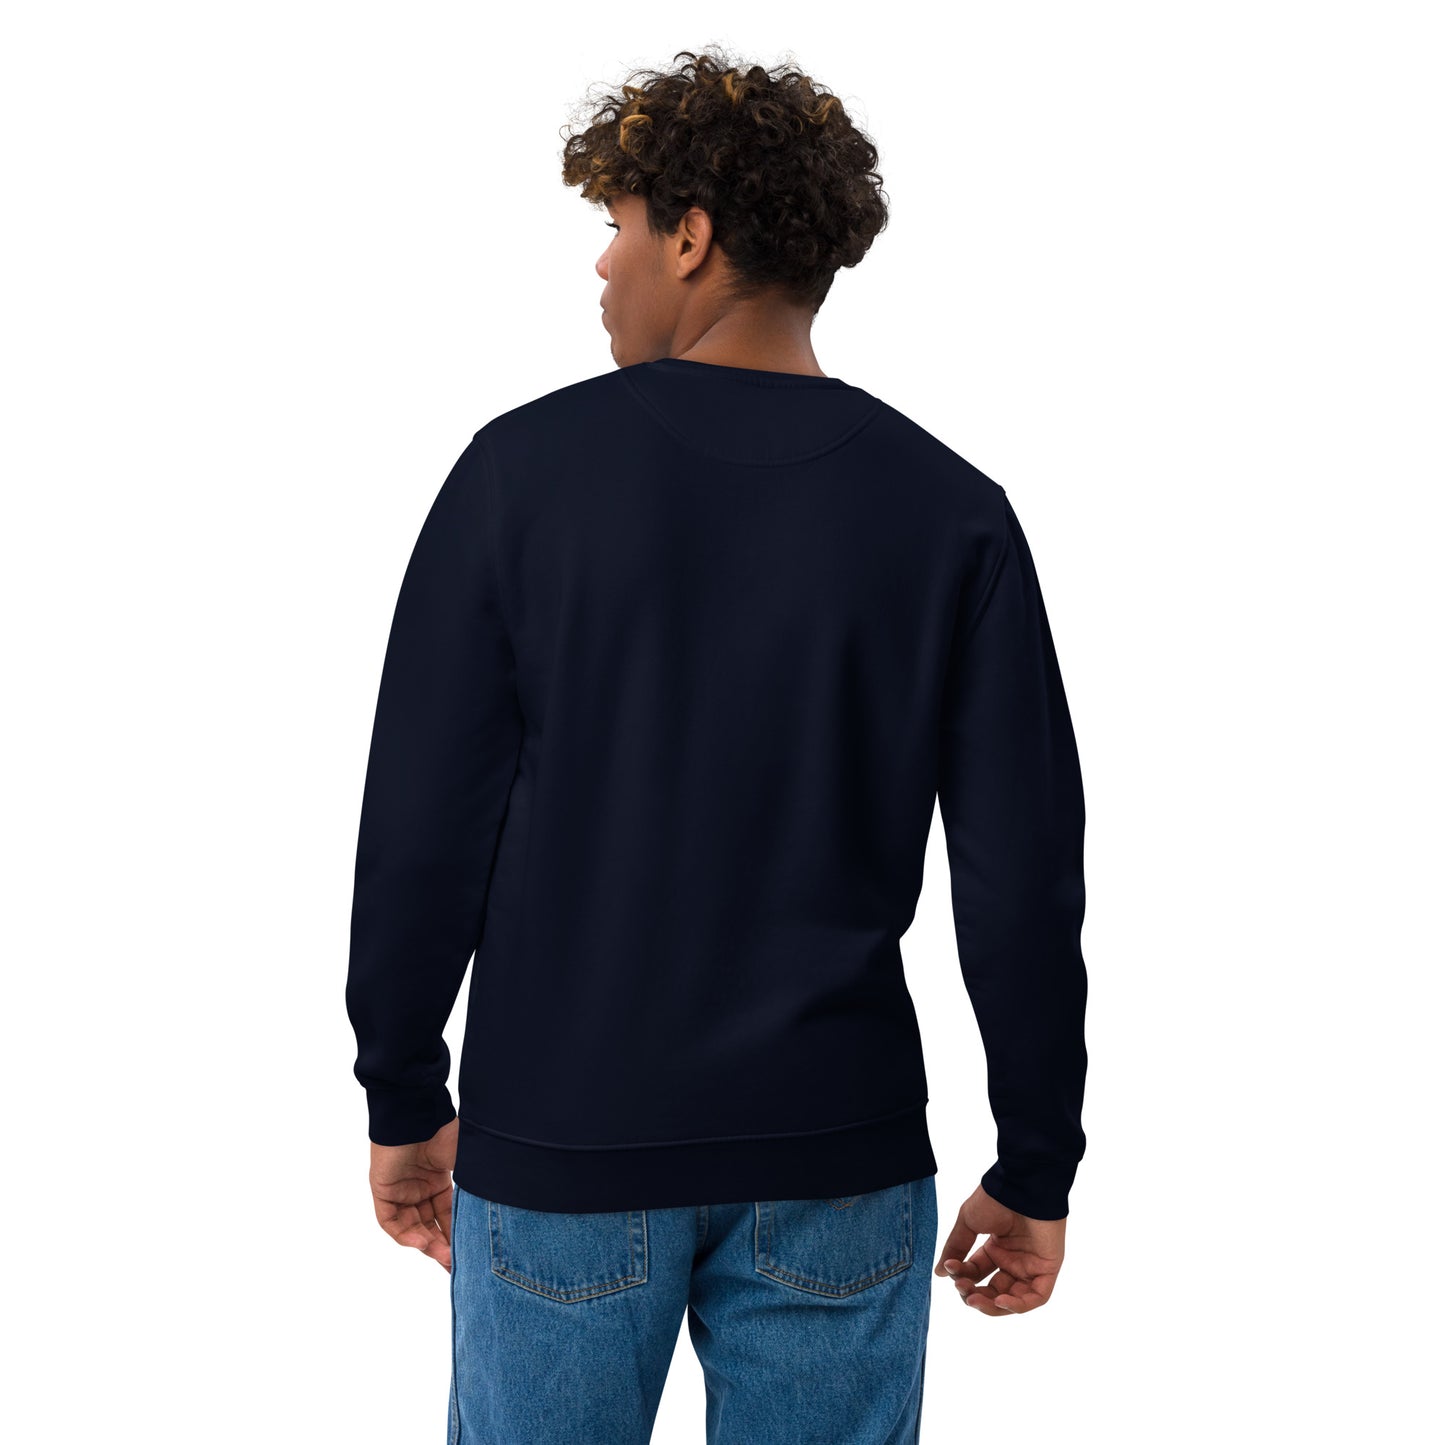 FE033.2 - Unisex Bio-Pullover - Sweater - Sweatshirt - Free Afghanistan 2 - white logo